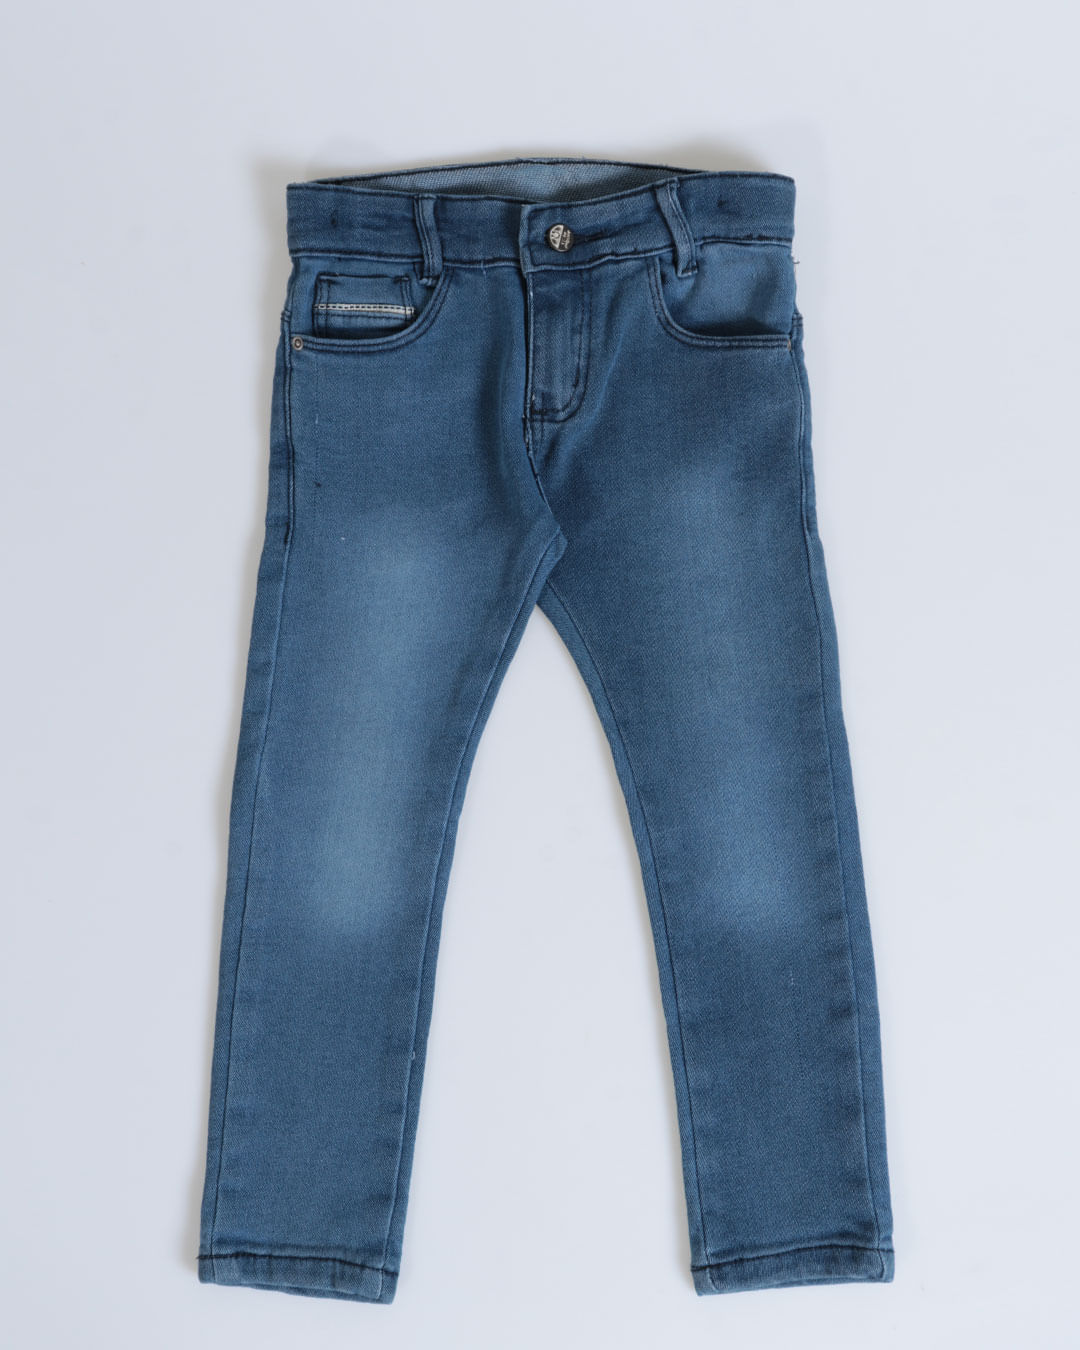 39521000077045-blue-jeans-medio-1